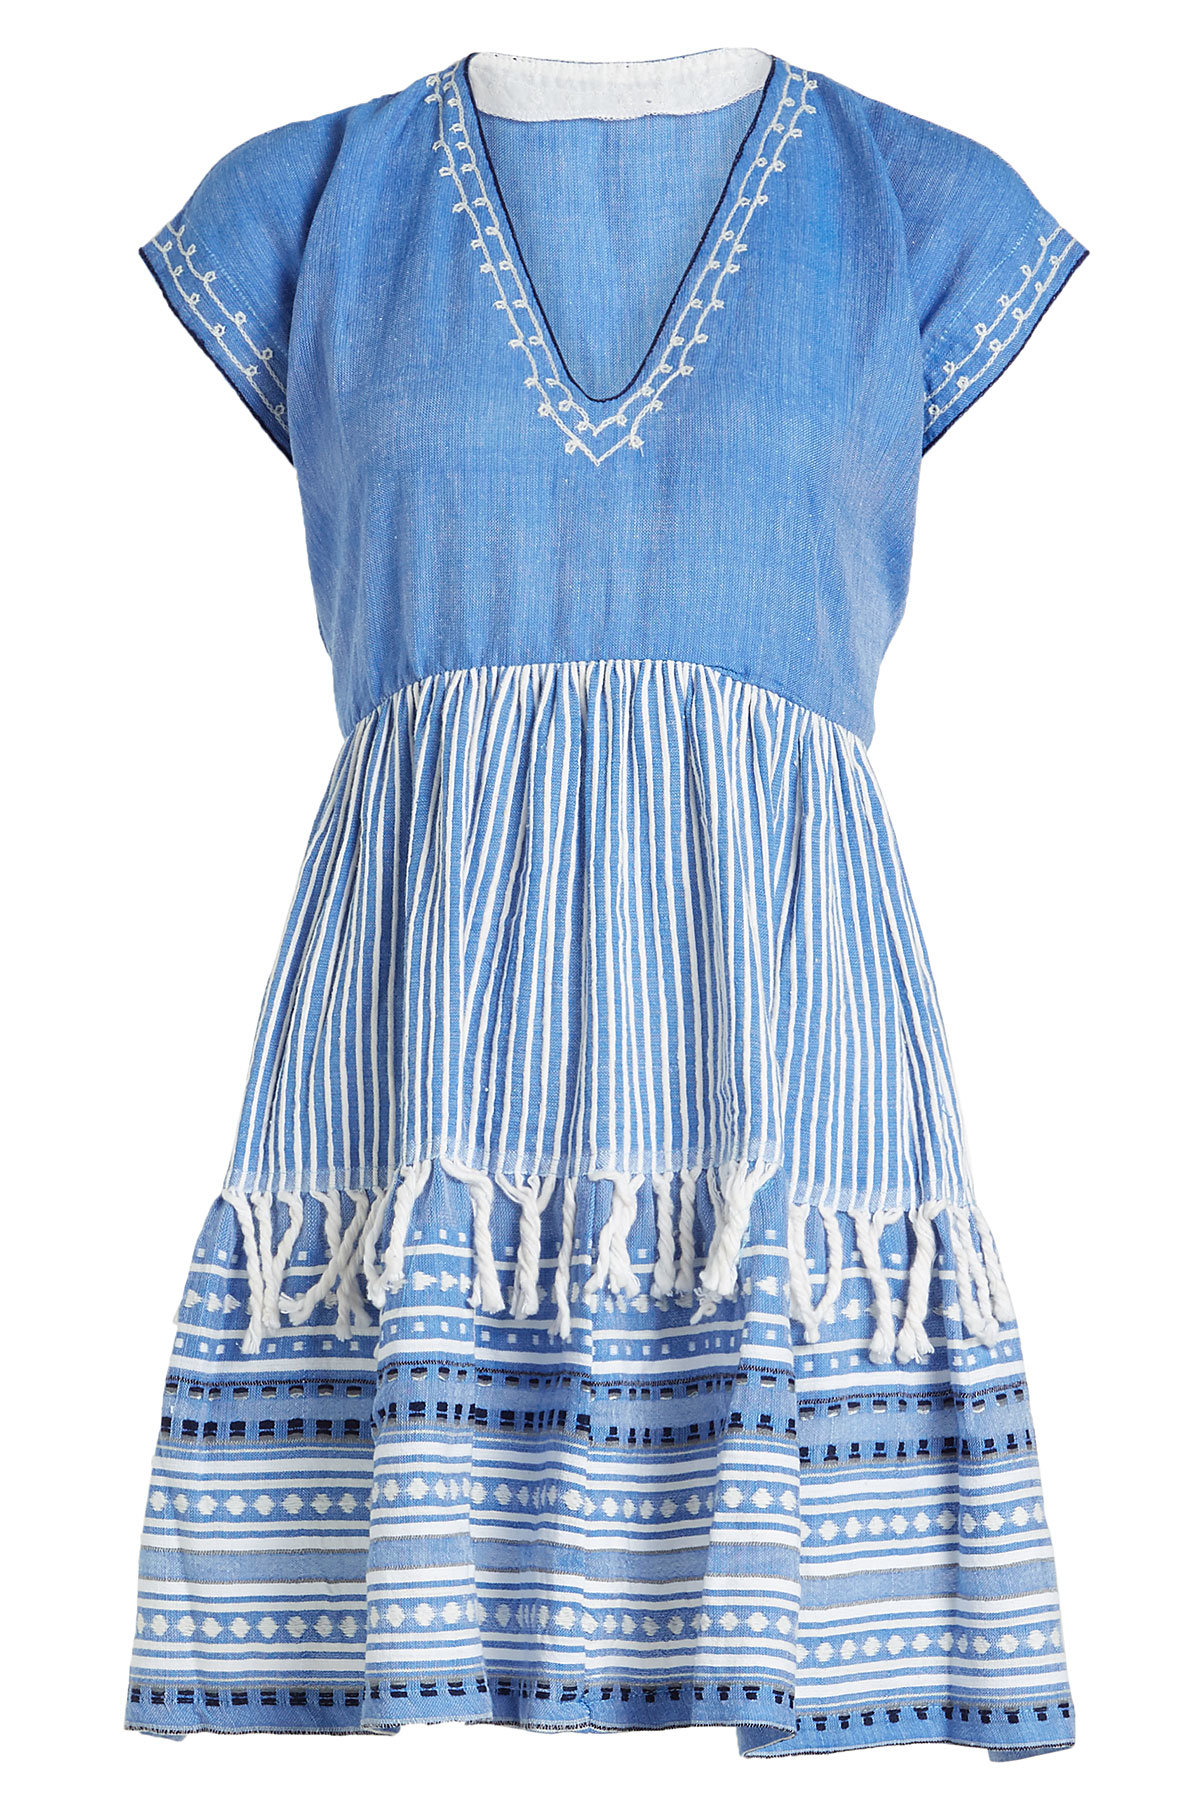 LemLem - Izara Embroidered Cotton Dress